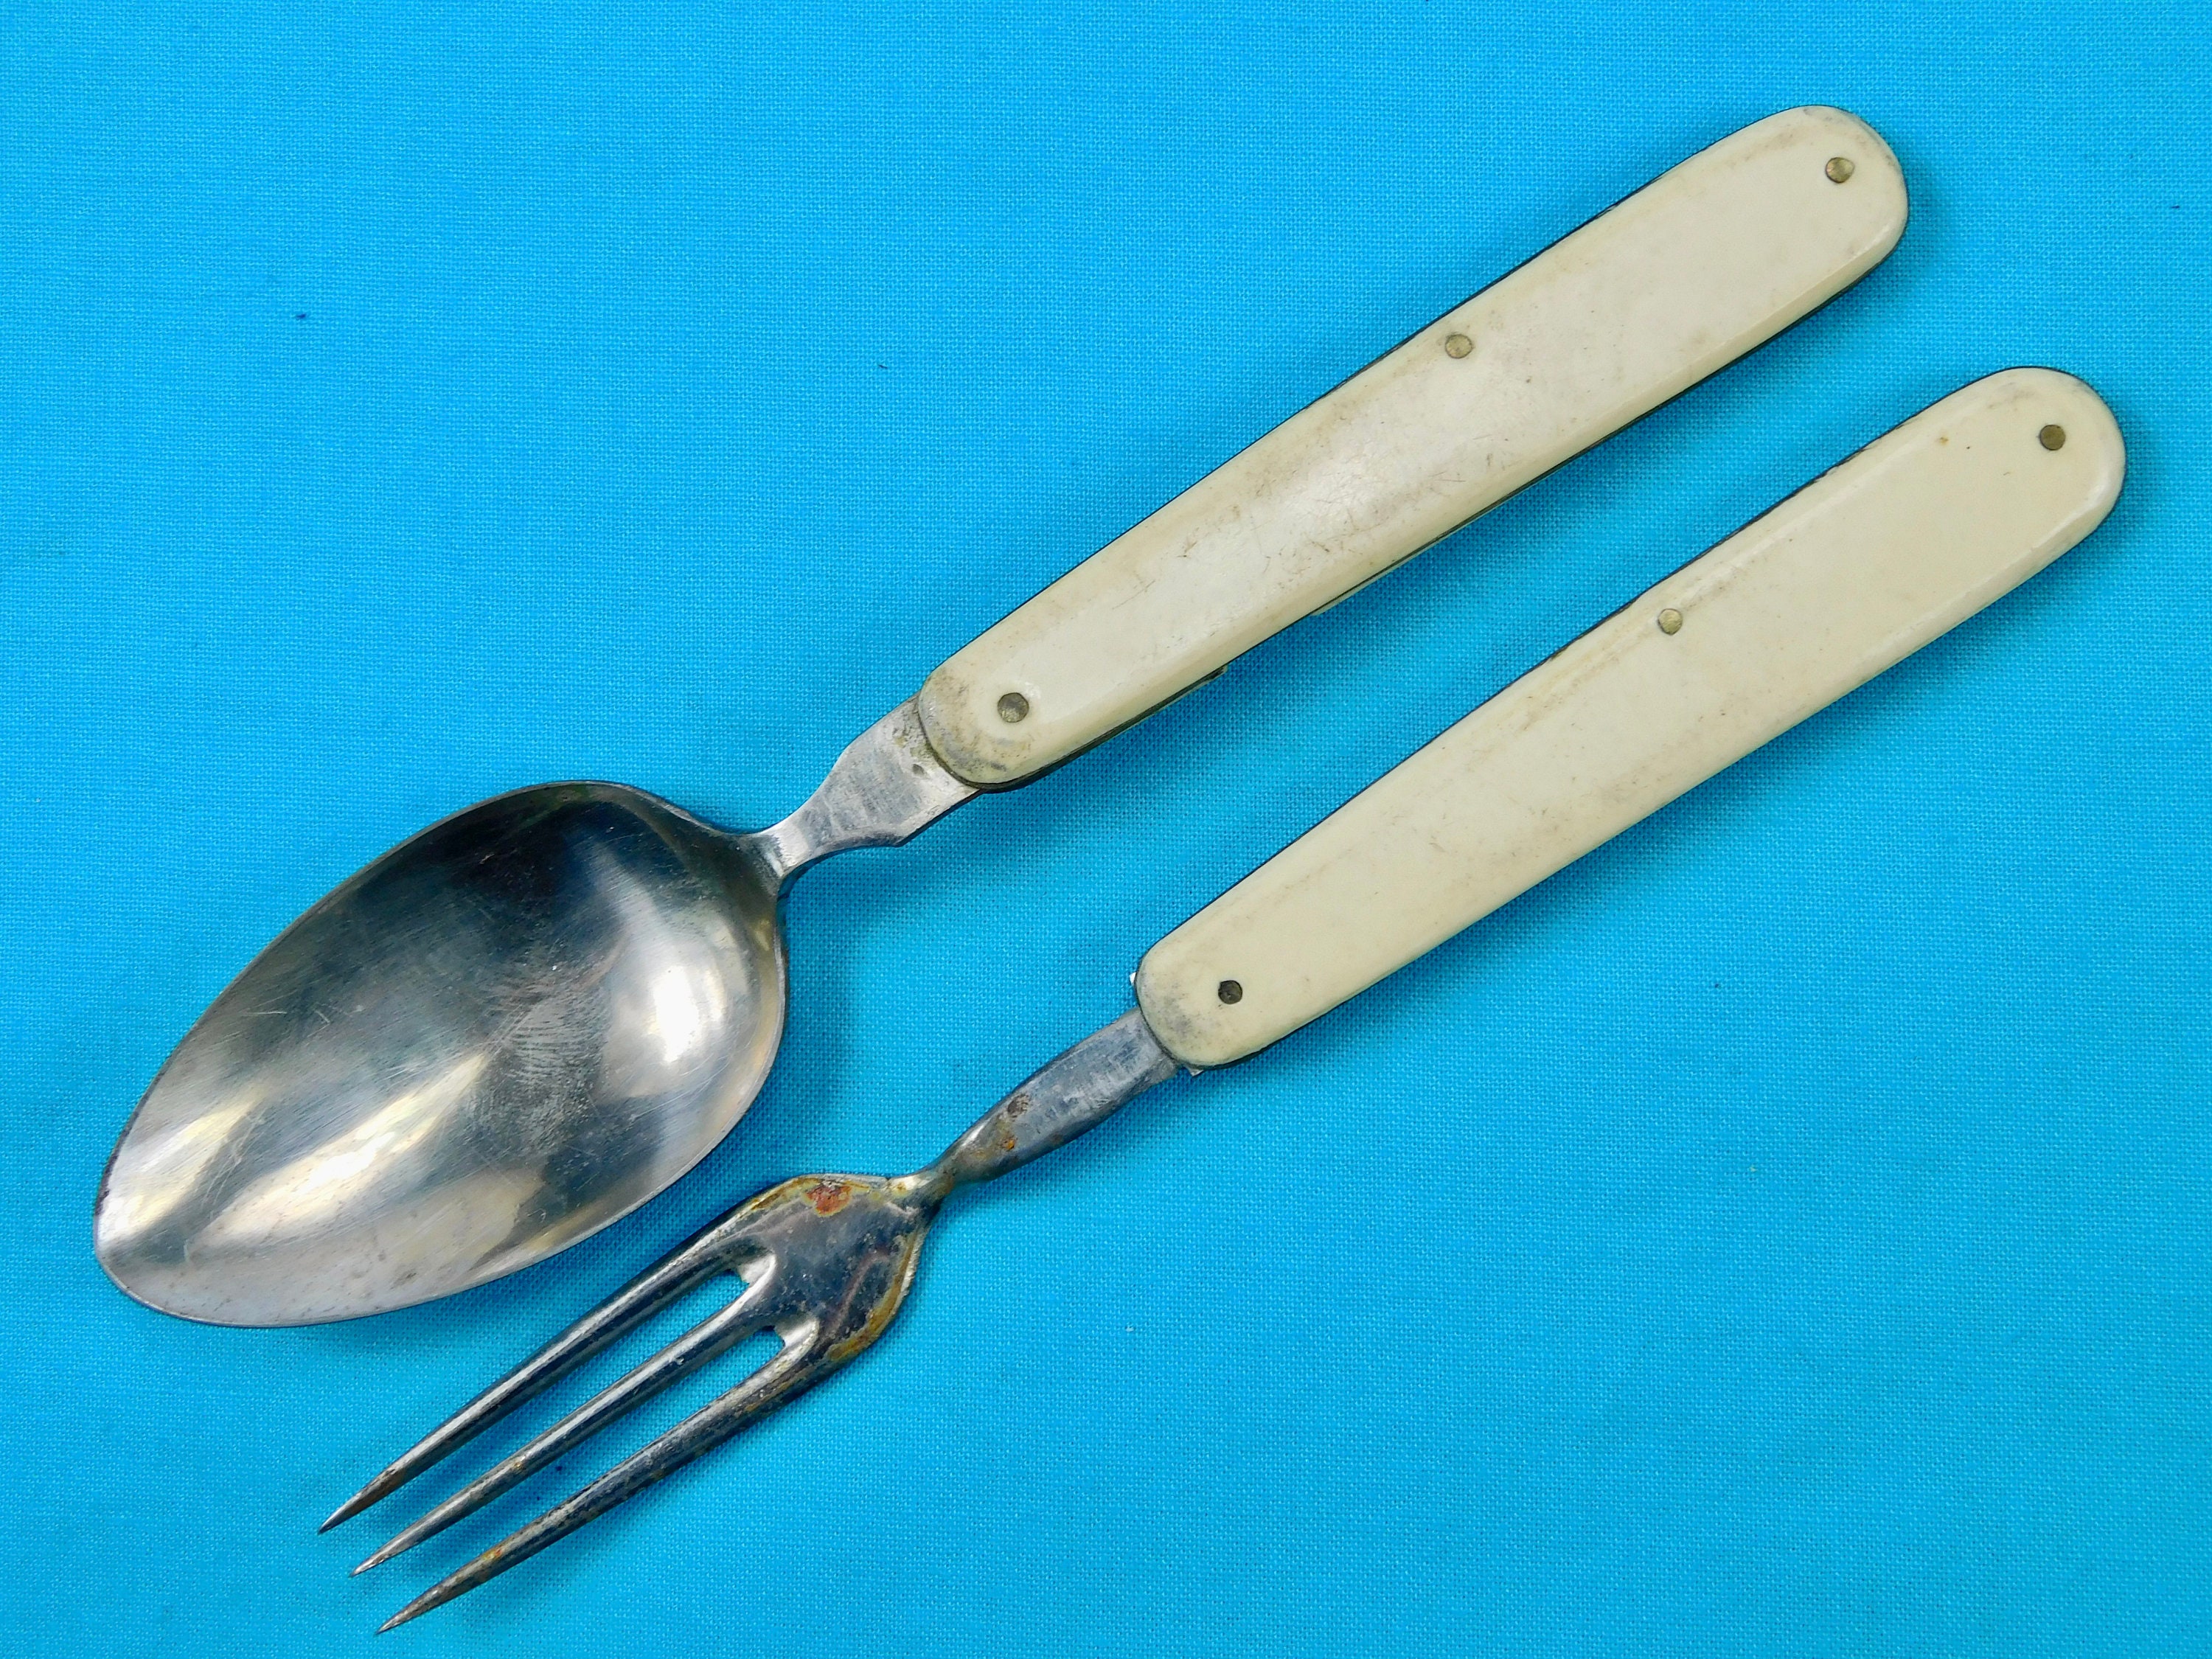 Vtg Boy Scouts BSA Utensils Silverware Knife Fork Spoon Nesting Kit Set  (A4)